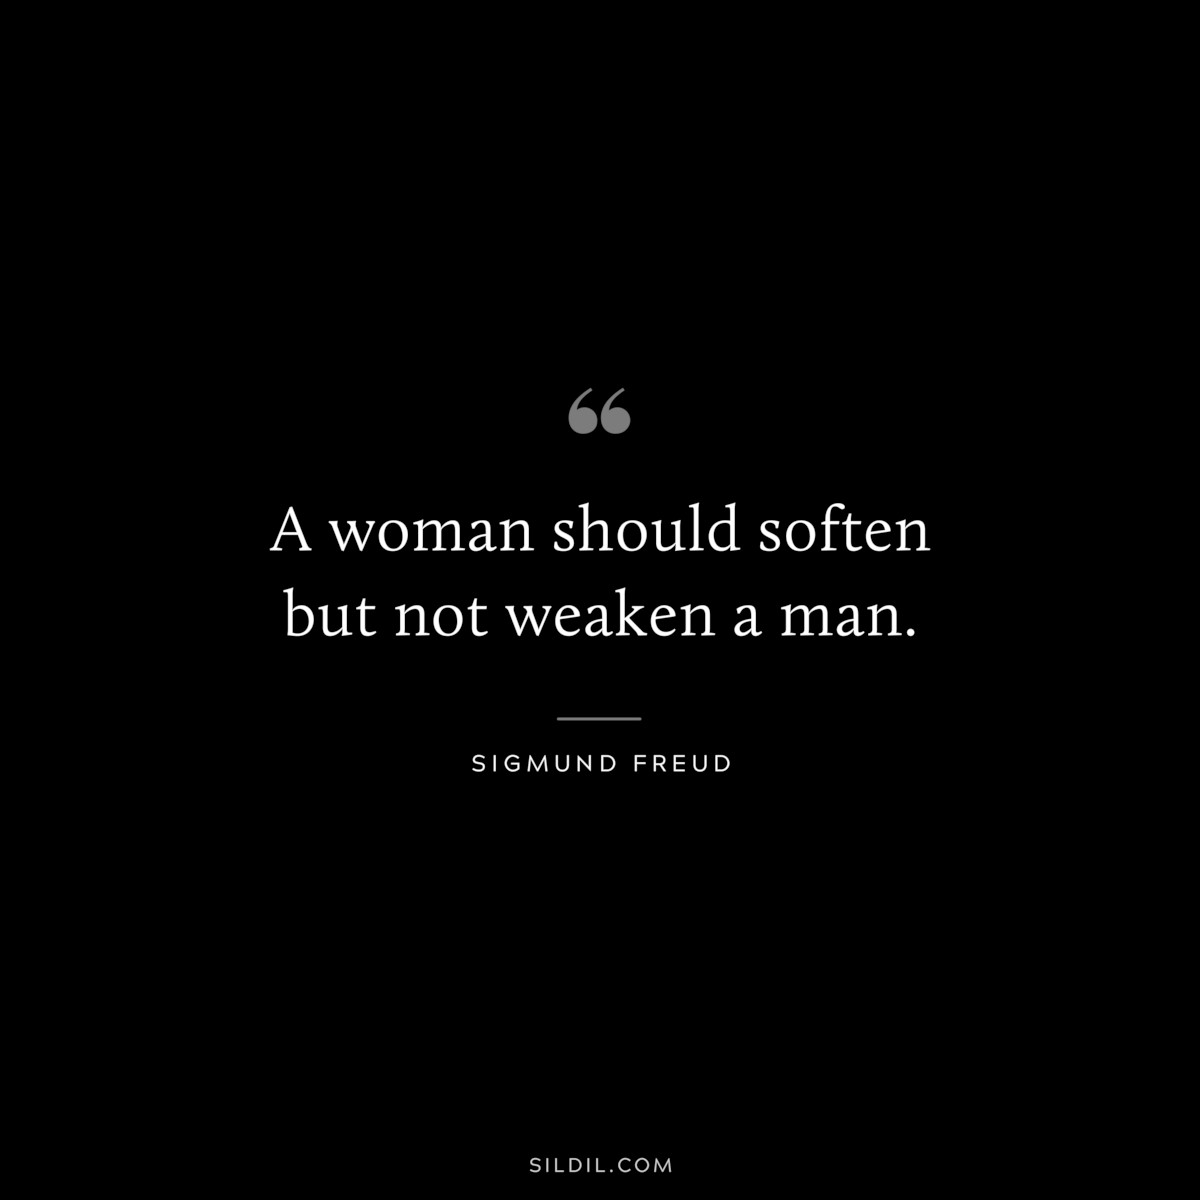 A woman should soften but not weaken a man. ― Sigmund Frued